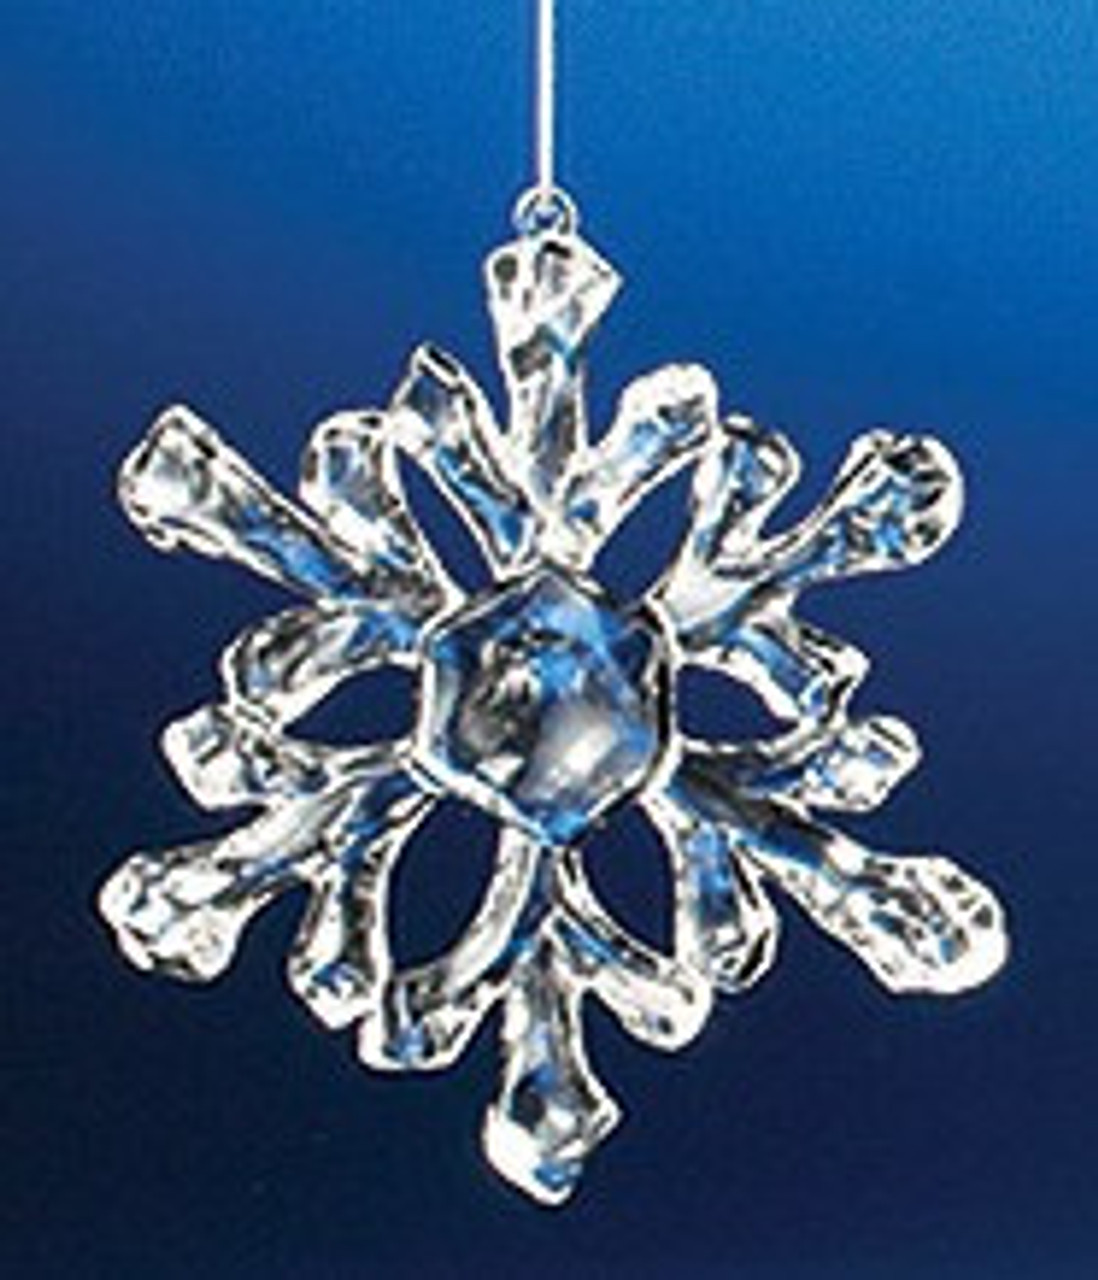  36 Pieces Plastic Crystal Snowflake Ornament Acrylic